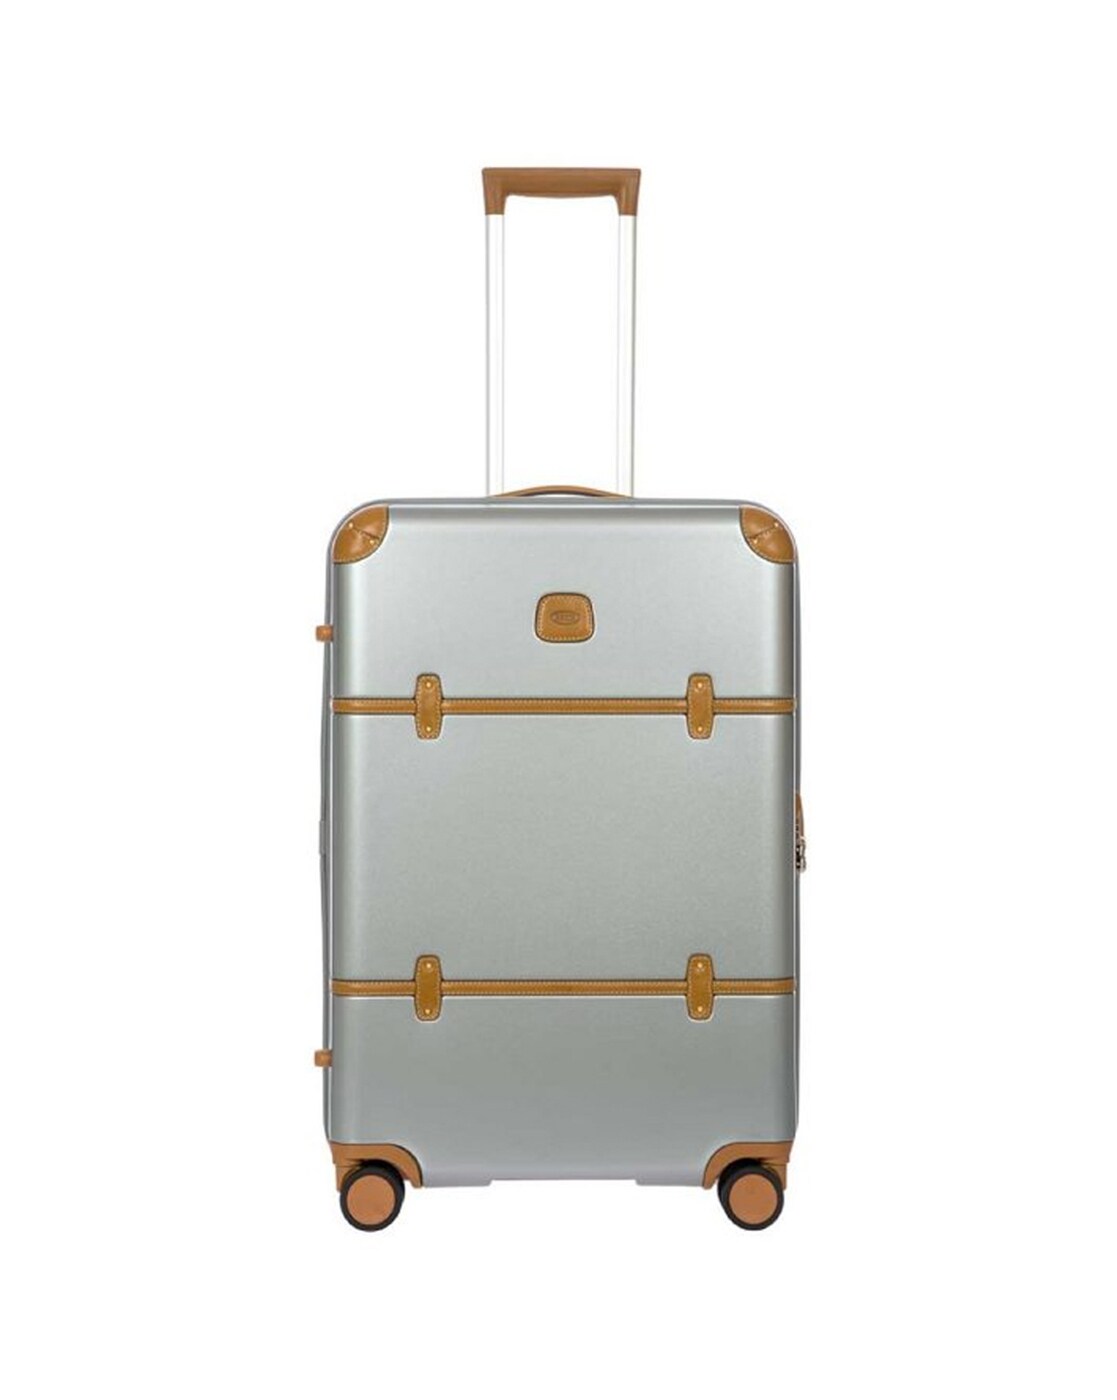 Bric's Bellagio 2.0 32" Spinner Trunk Luggage